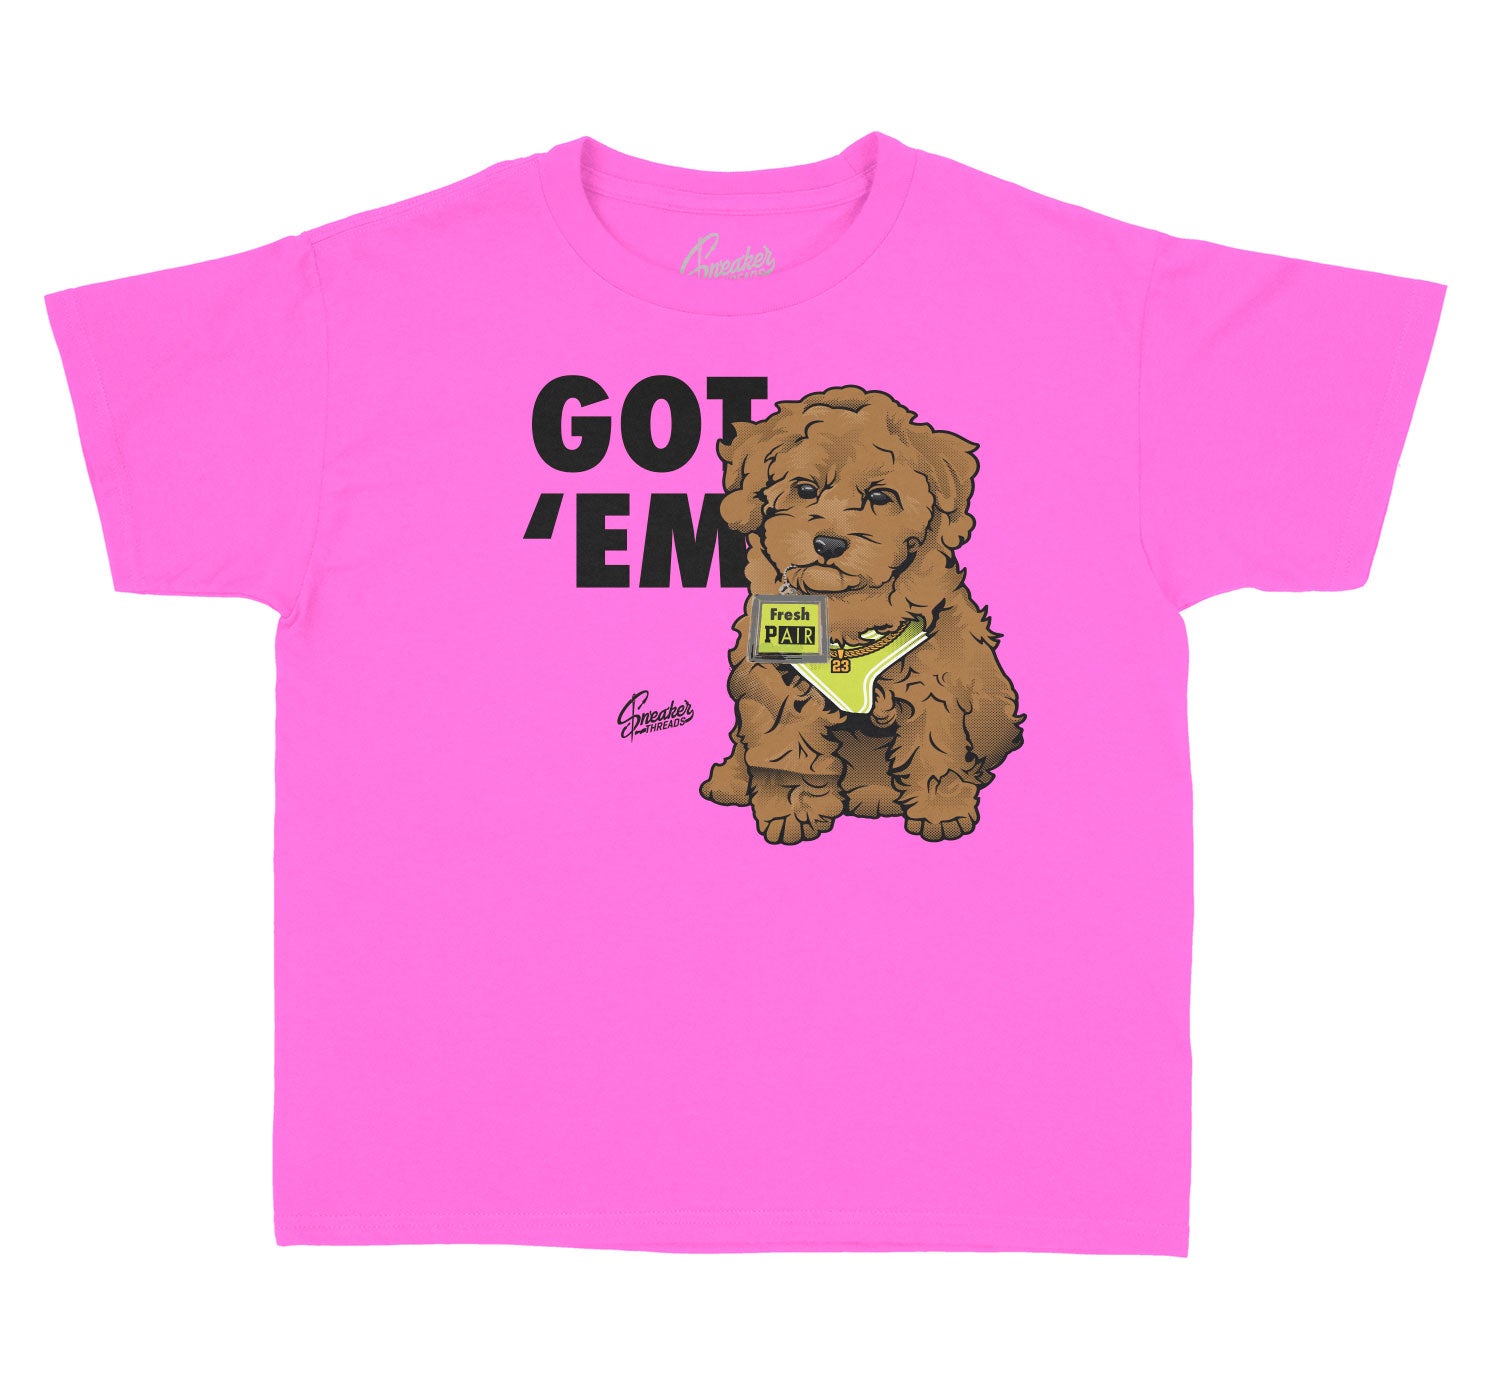 Kids Lemon Venom Shirt - Got Em - Neon Pink